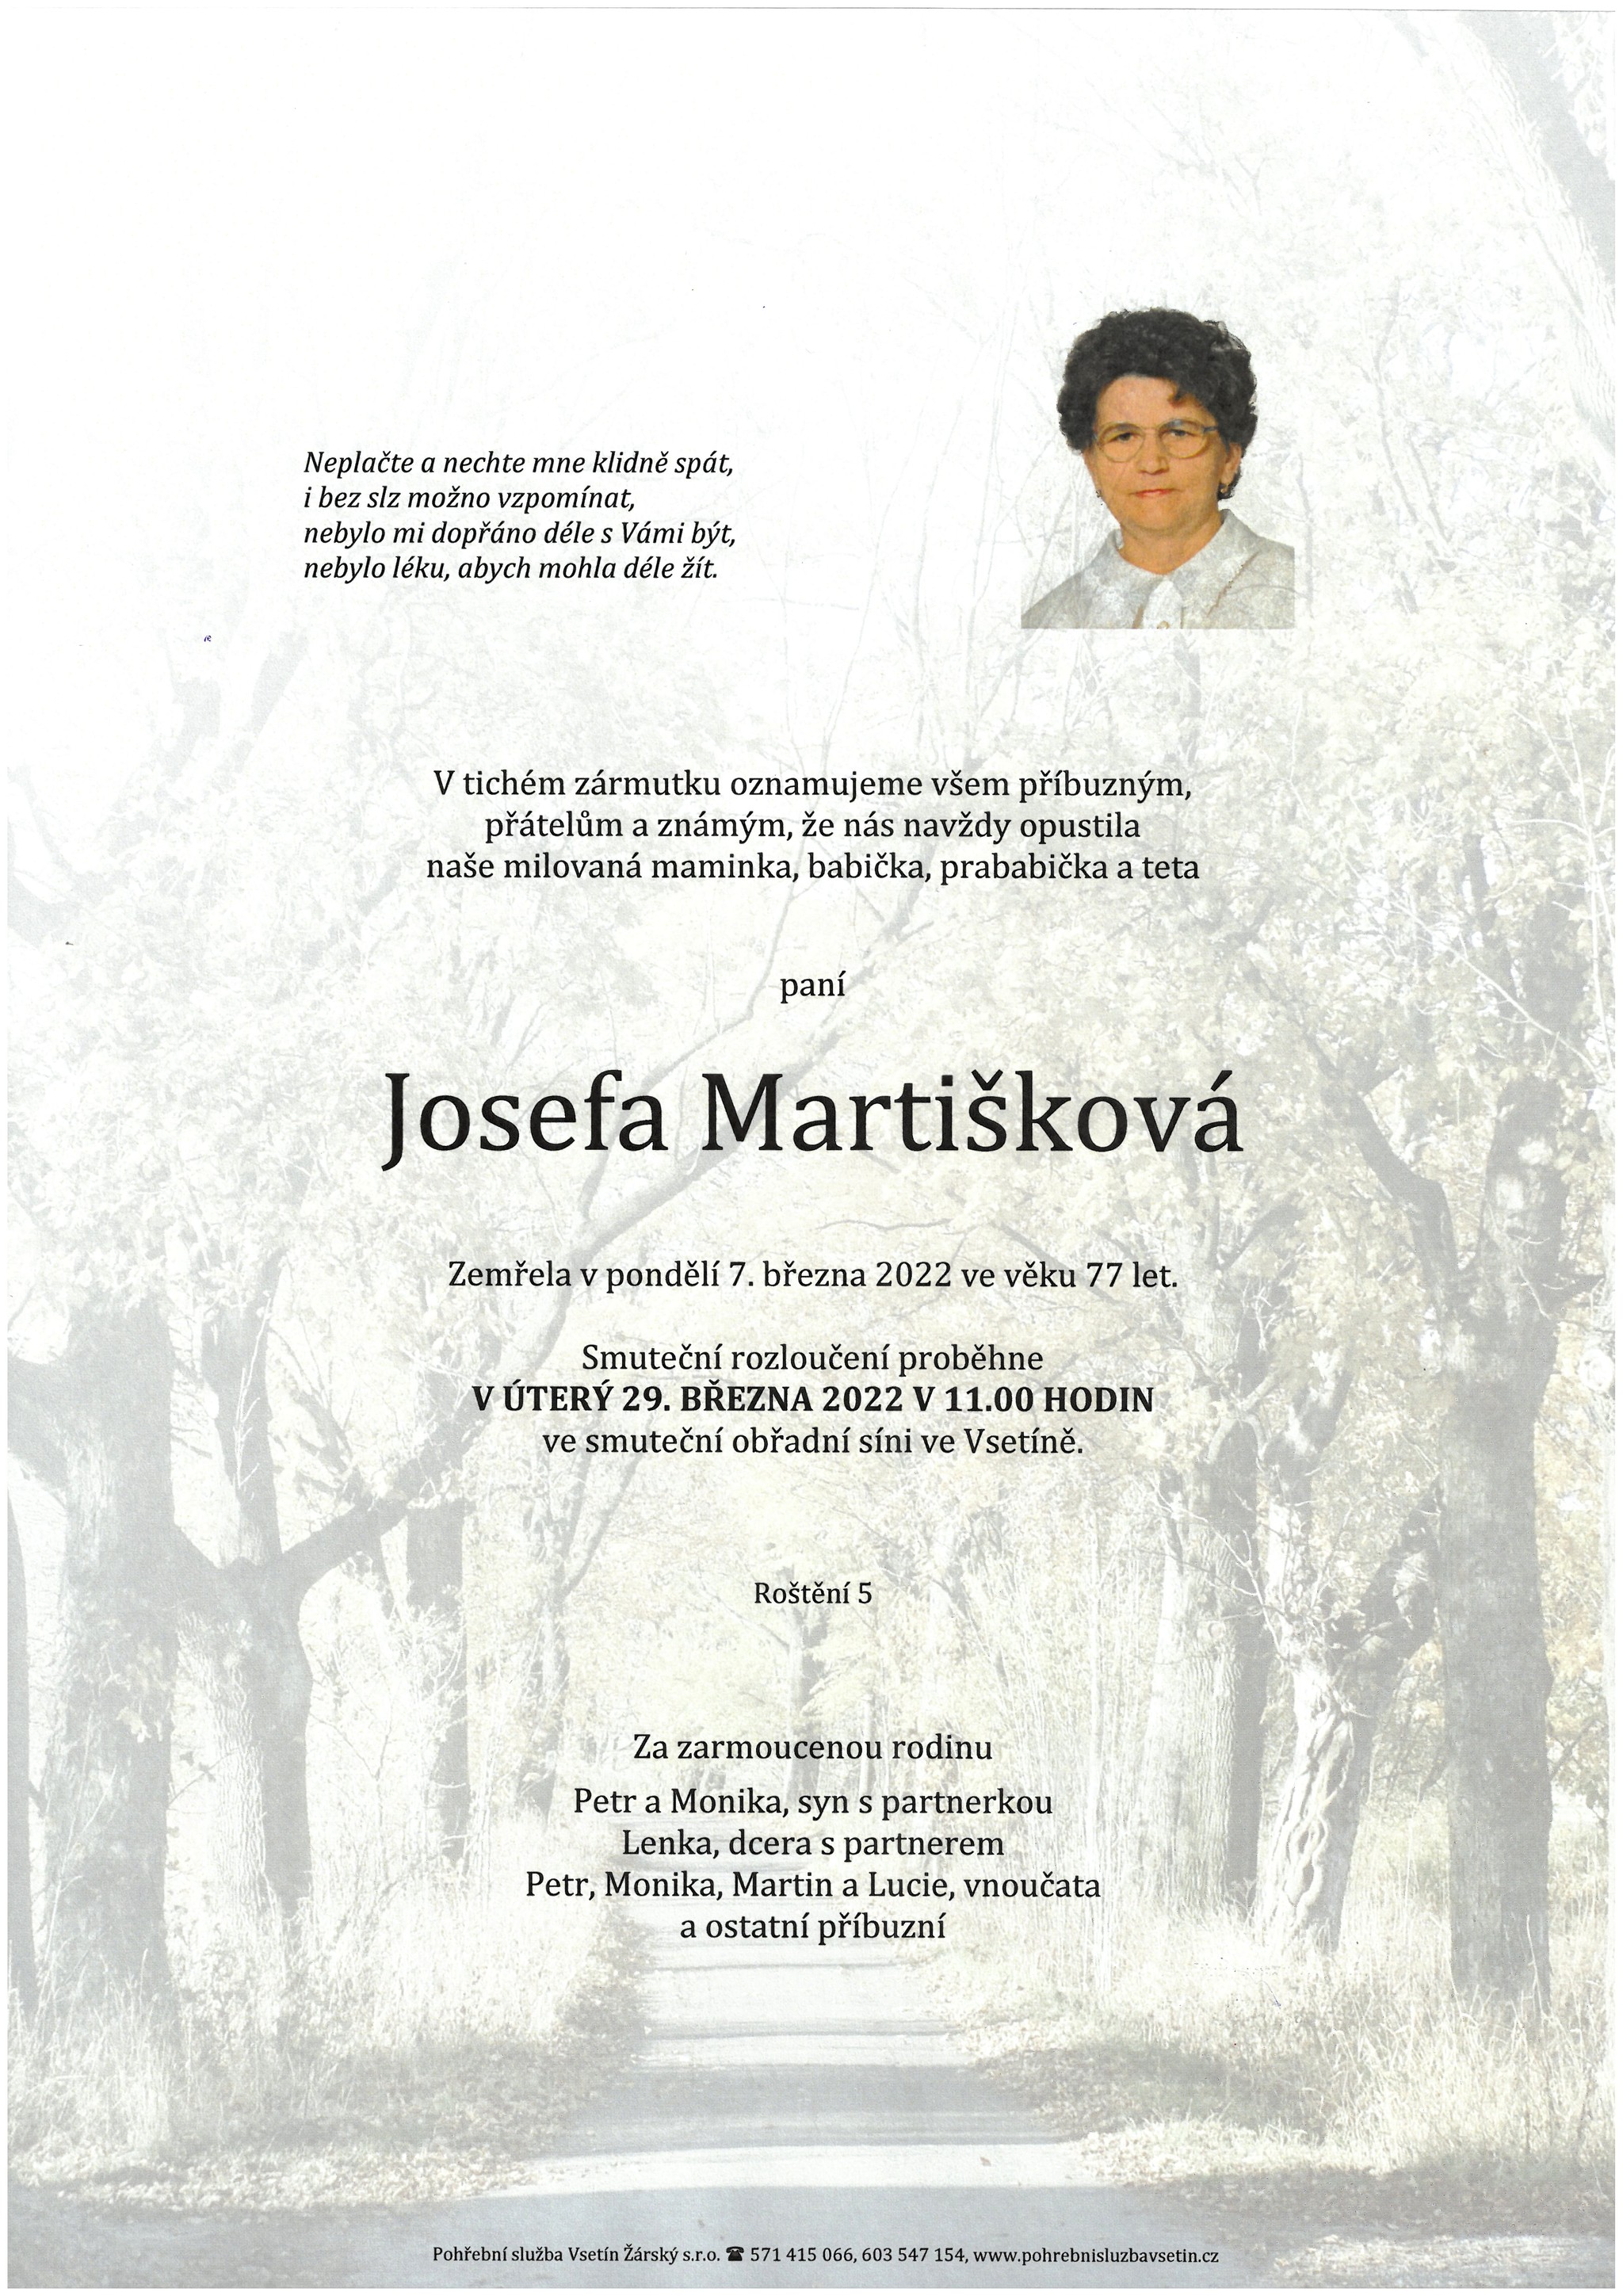 Josefa Martišková